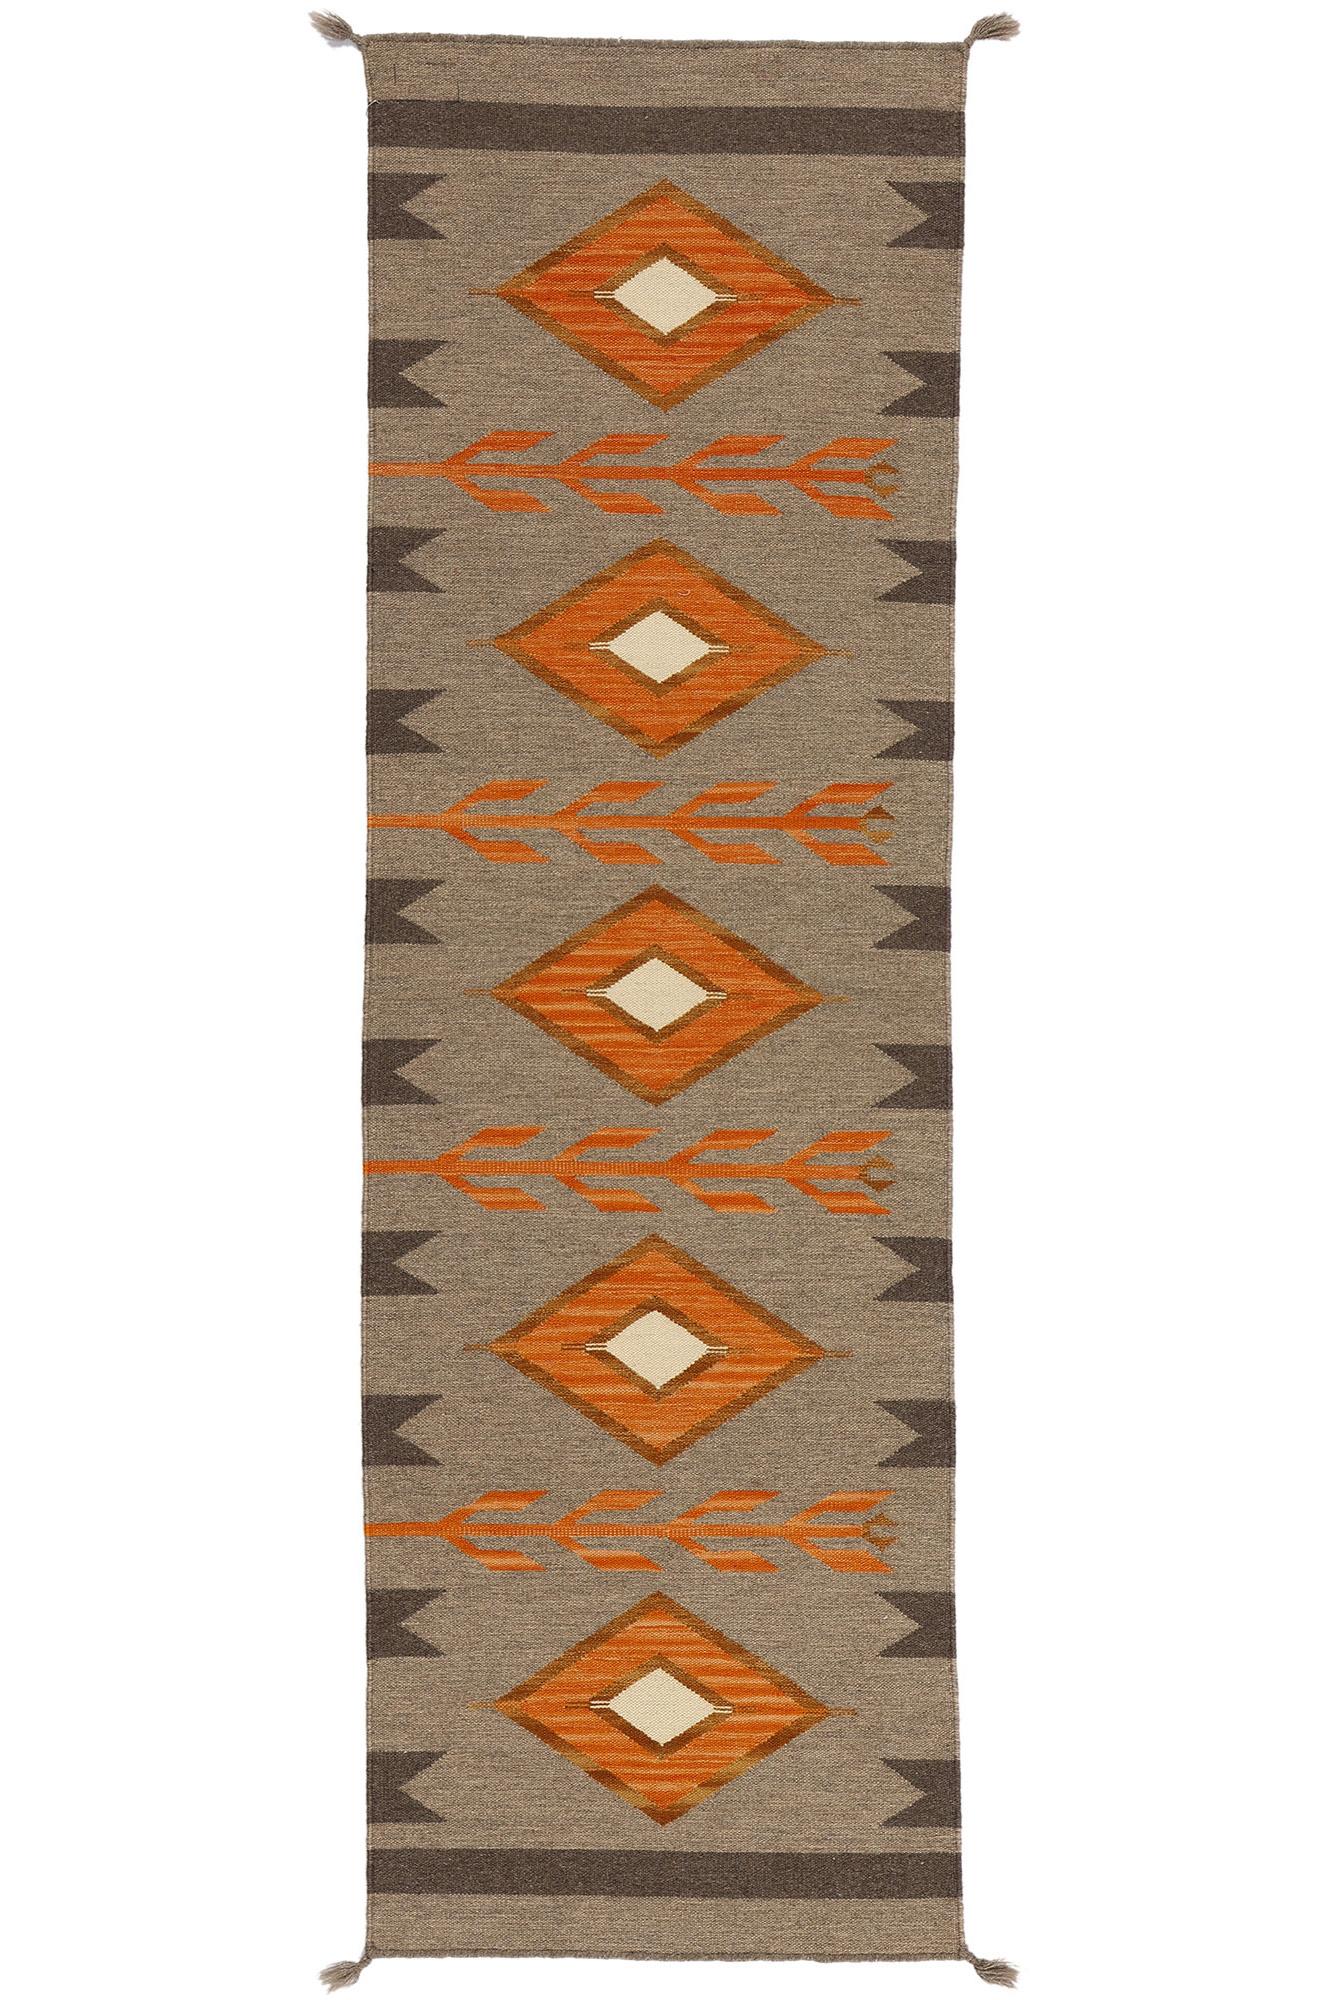 Contemporary Santa Fe Southwest Modern Navajo-Style Rug For Sale 3